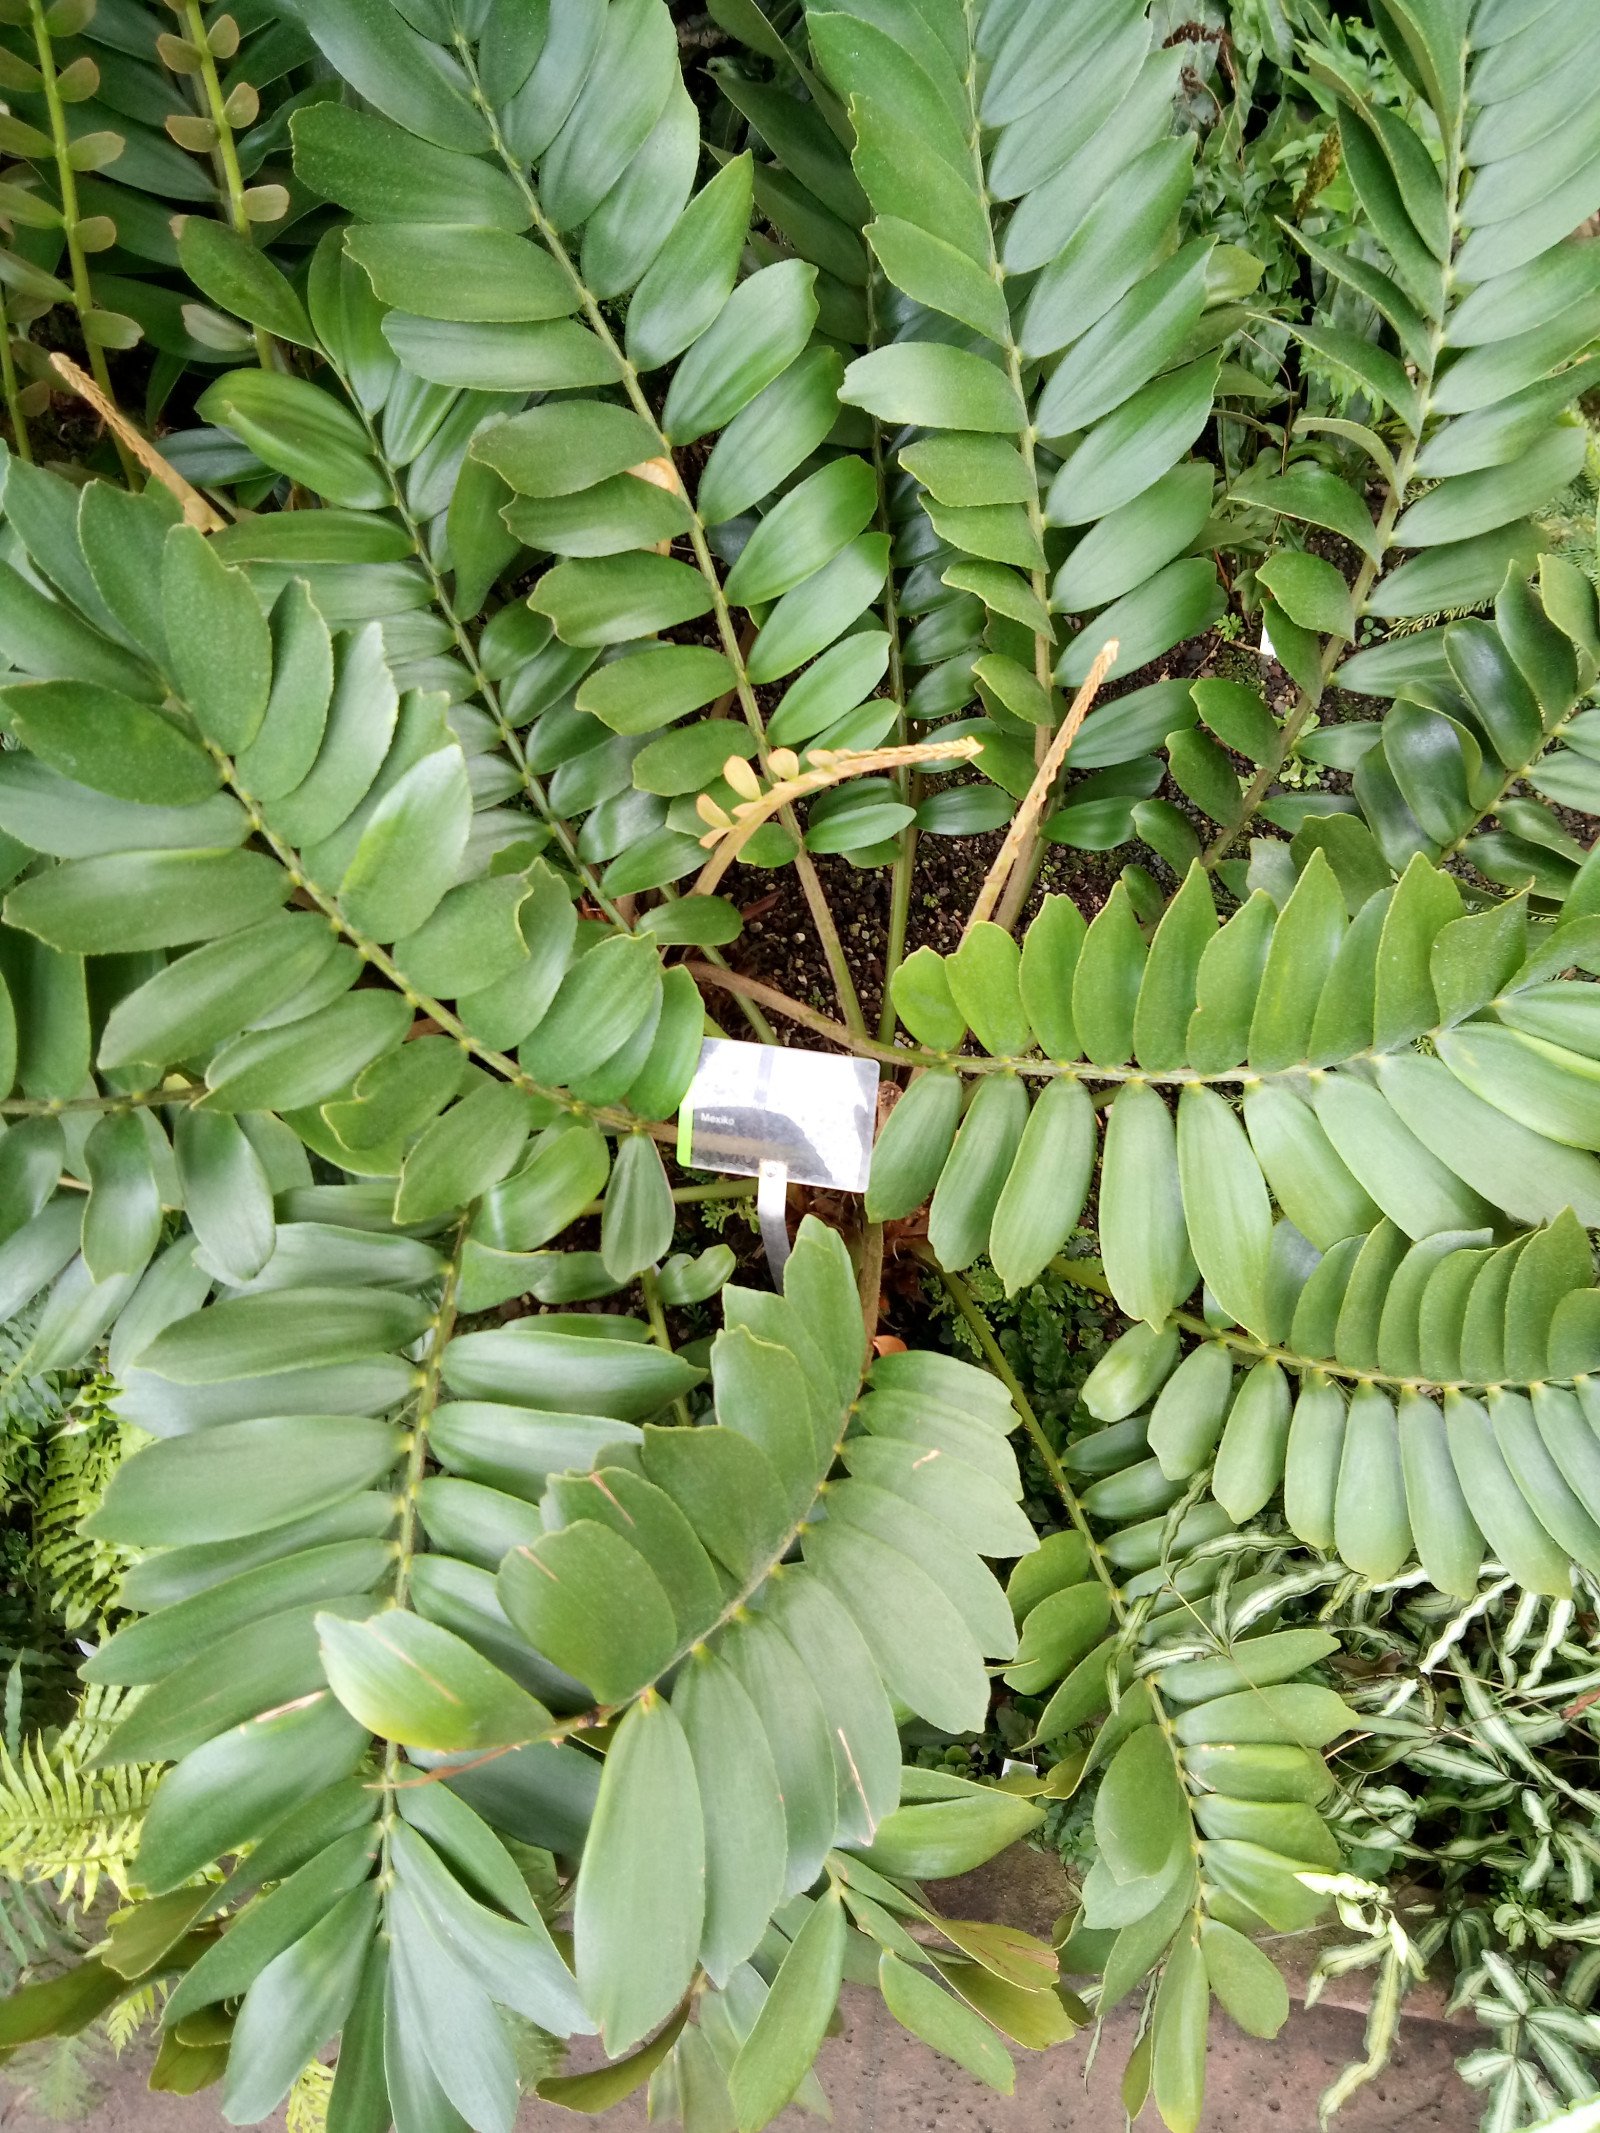 Zamia furfuracea - Entire plant